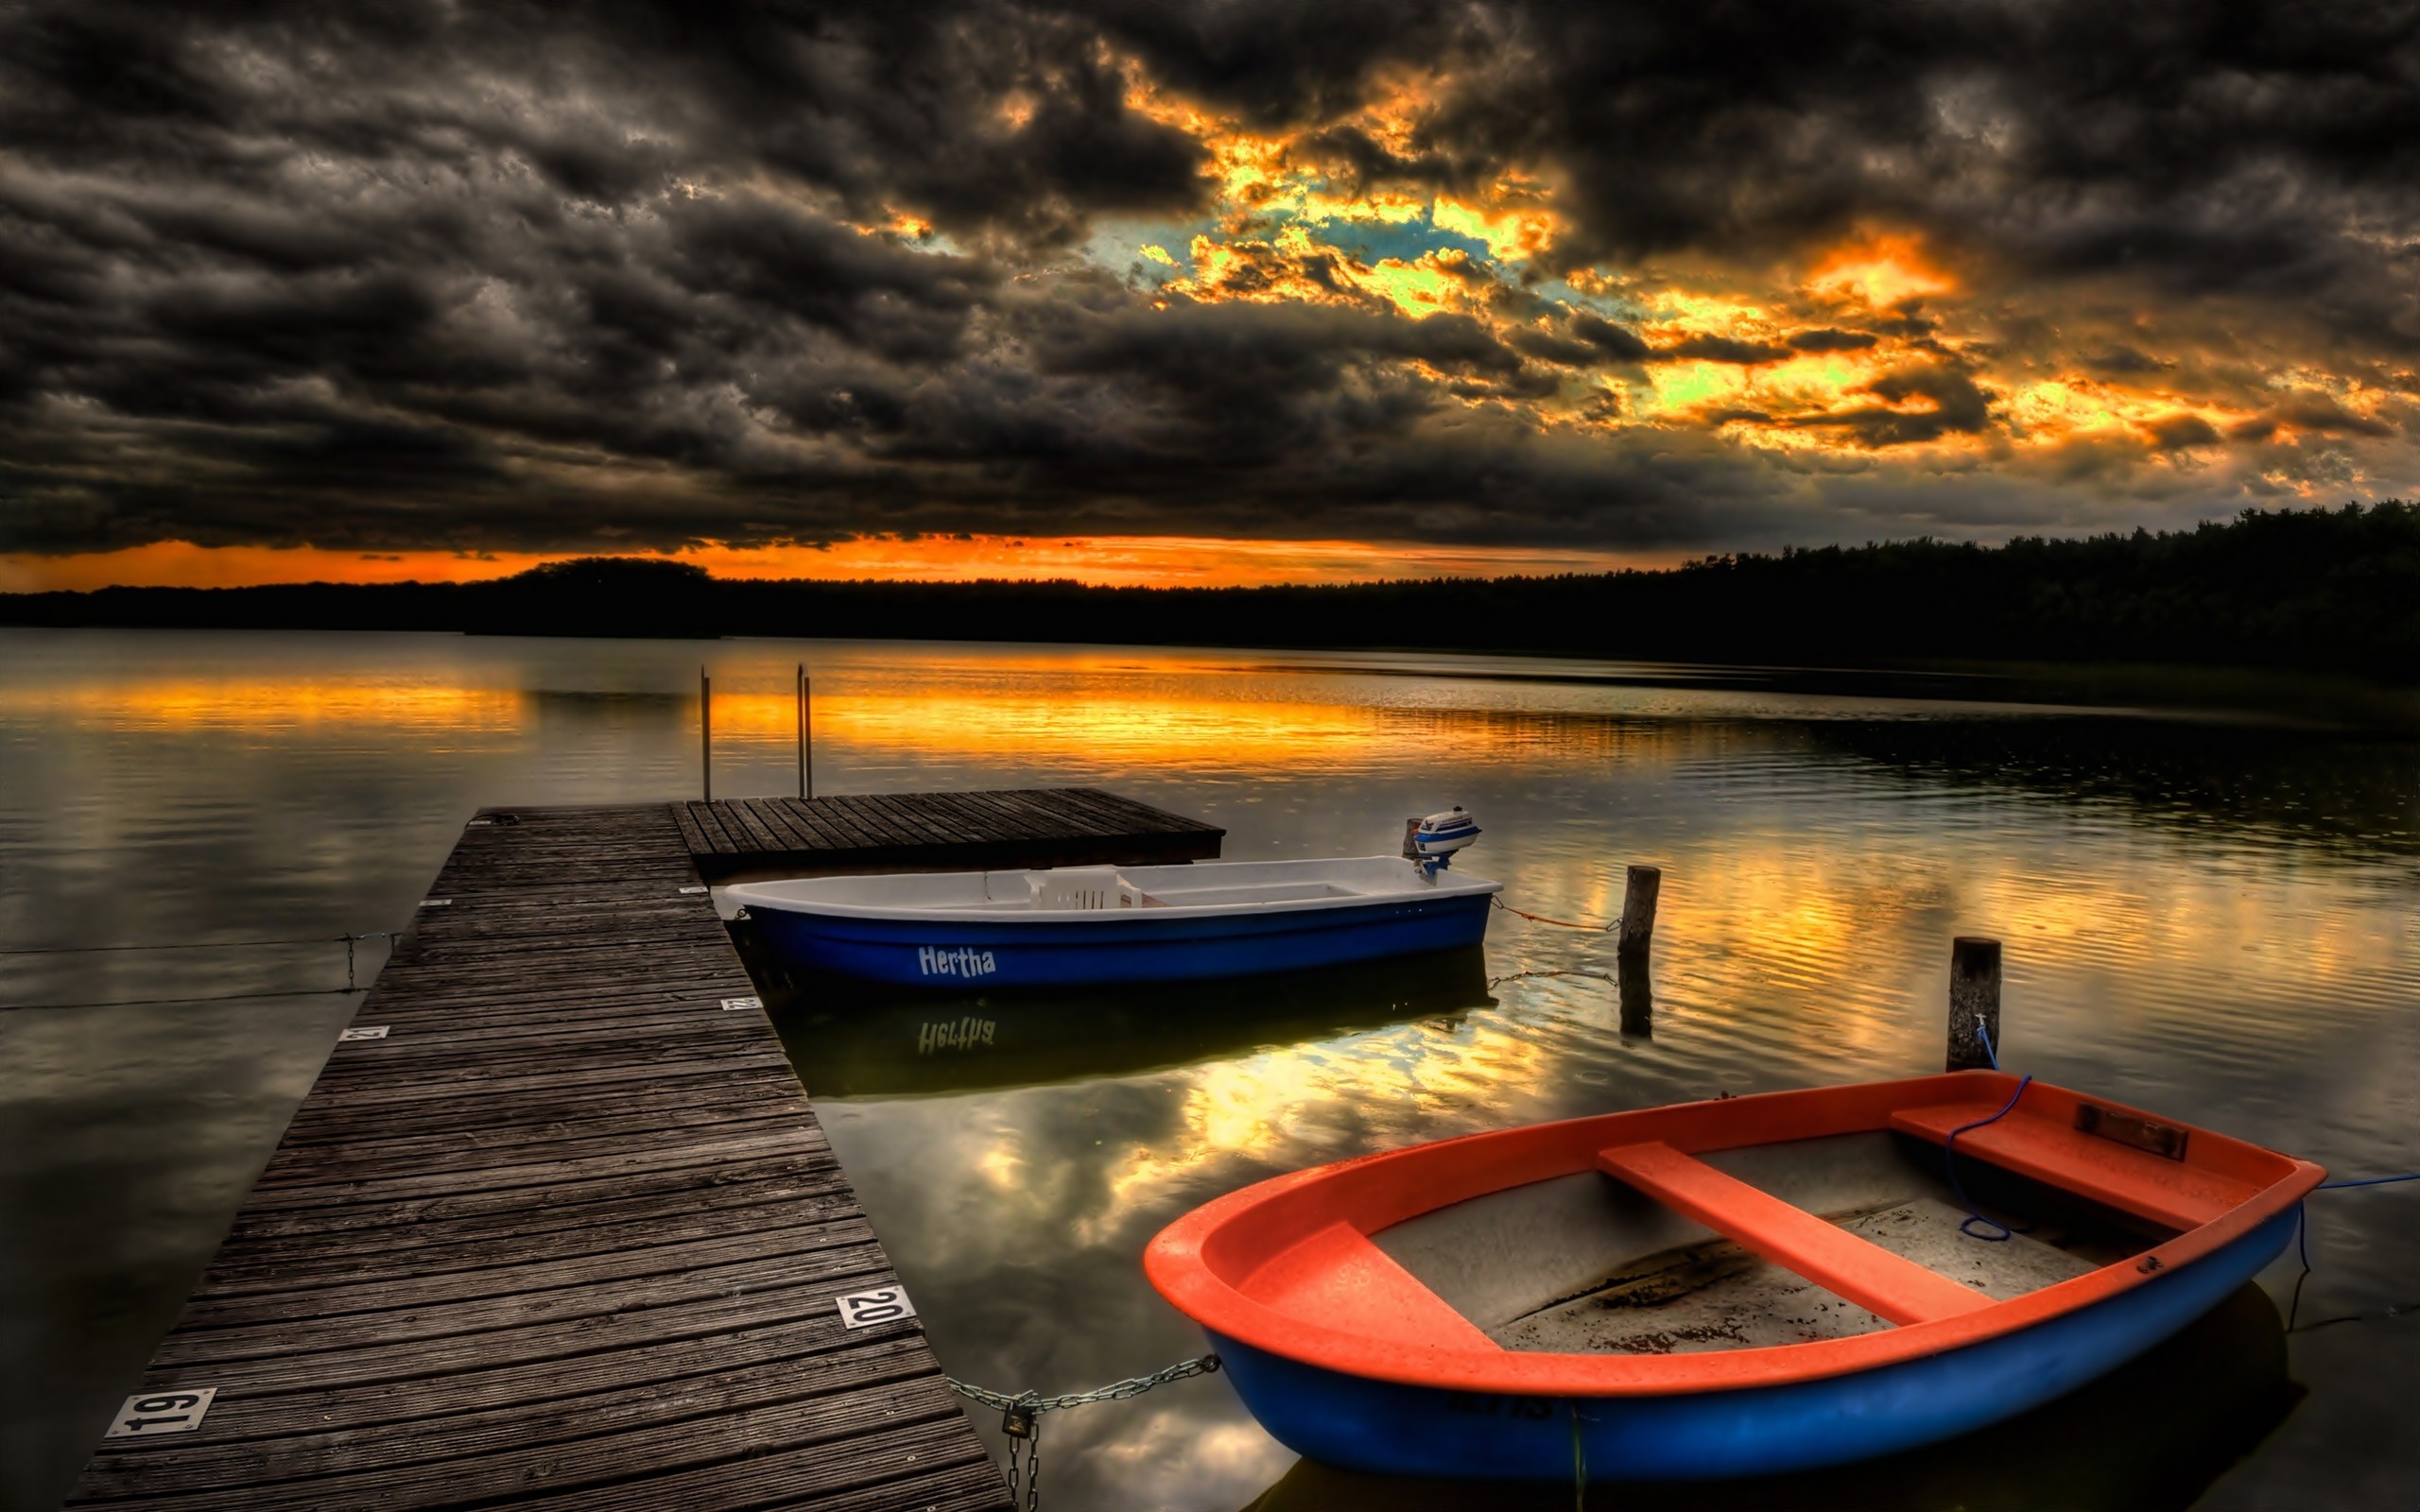 sunset, landscapes, nature, ships, piers, HDR photography - desktop wallpaper